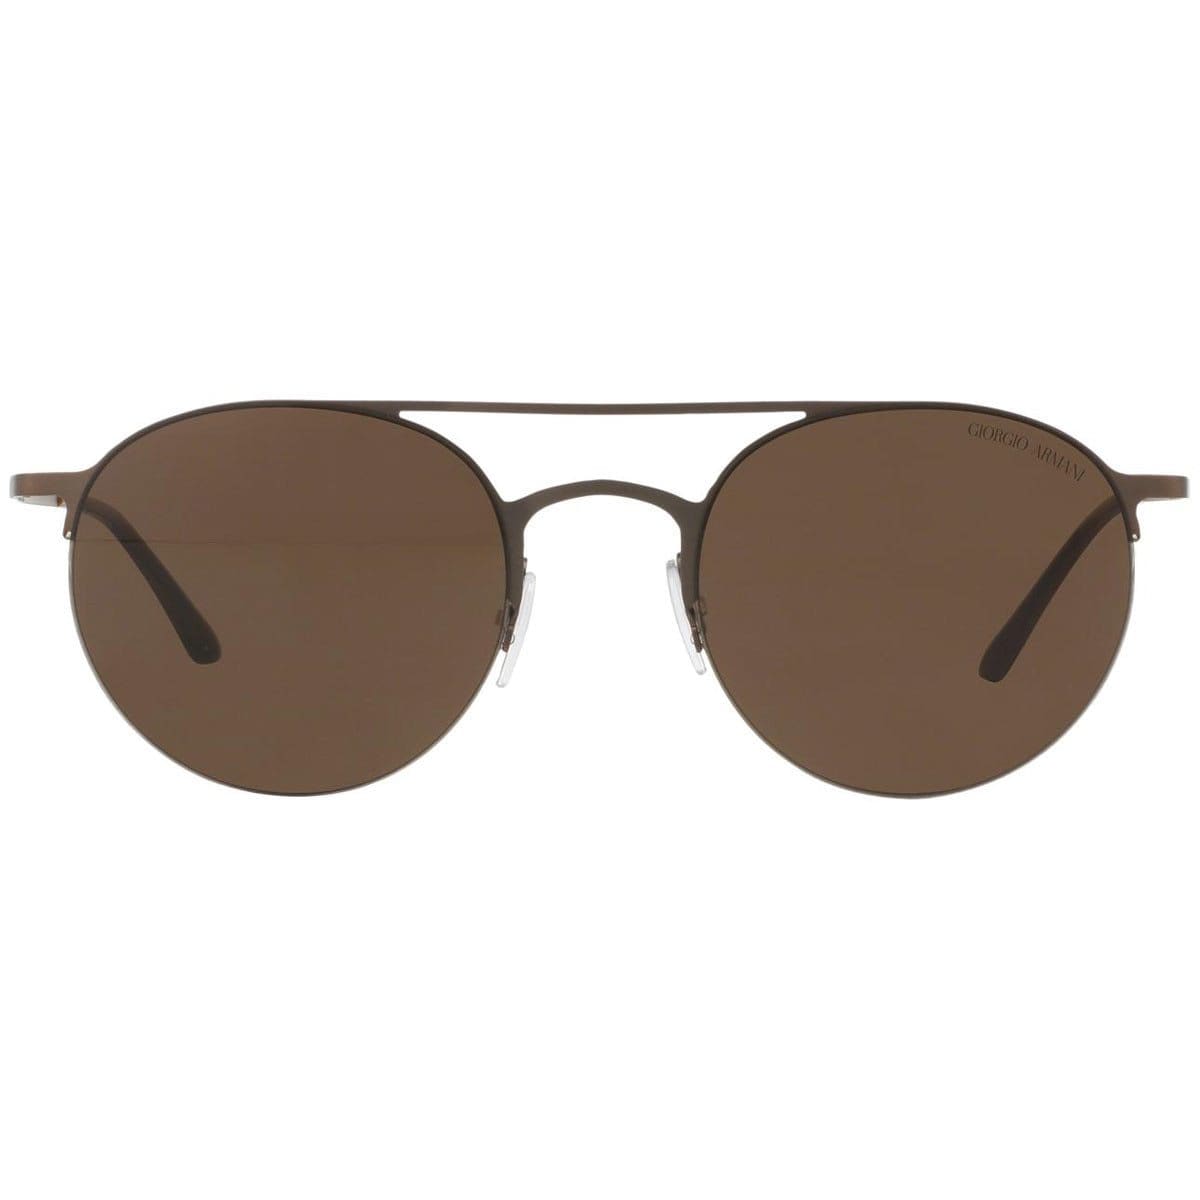 Giorgio Armani AR6023-305773 Brown Round Metal Sunglasses - 